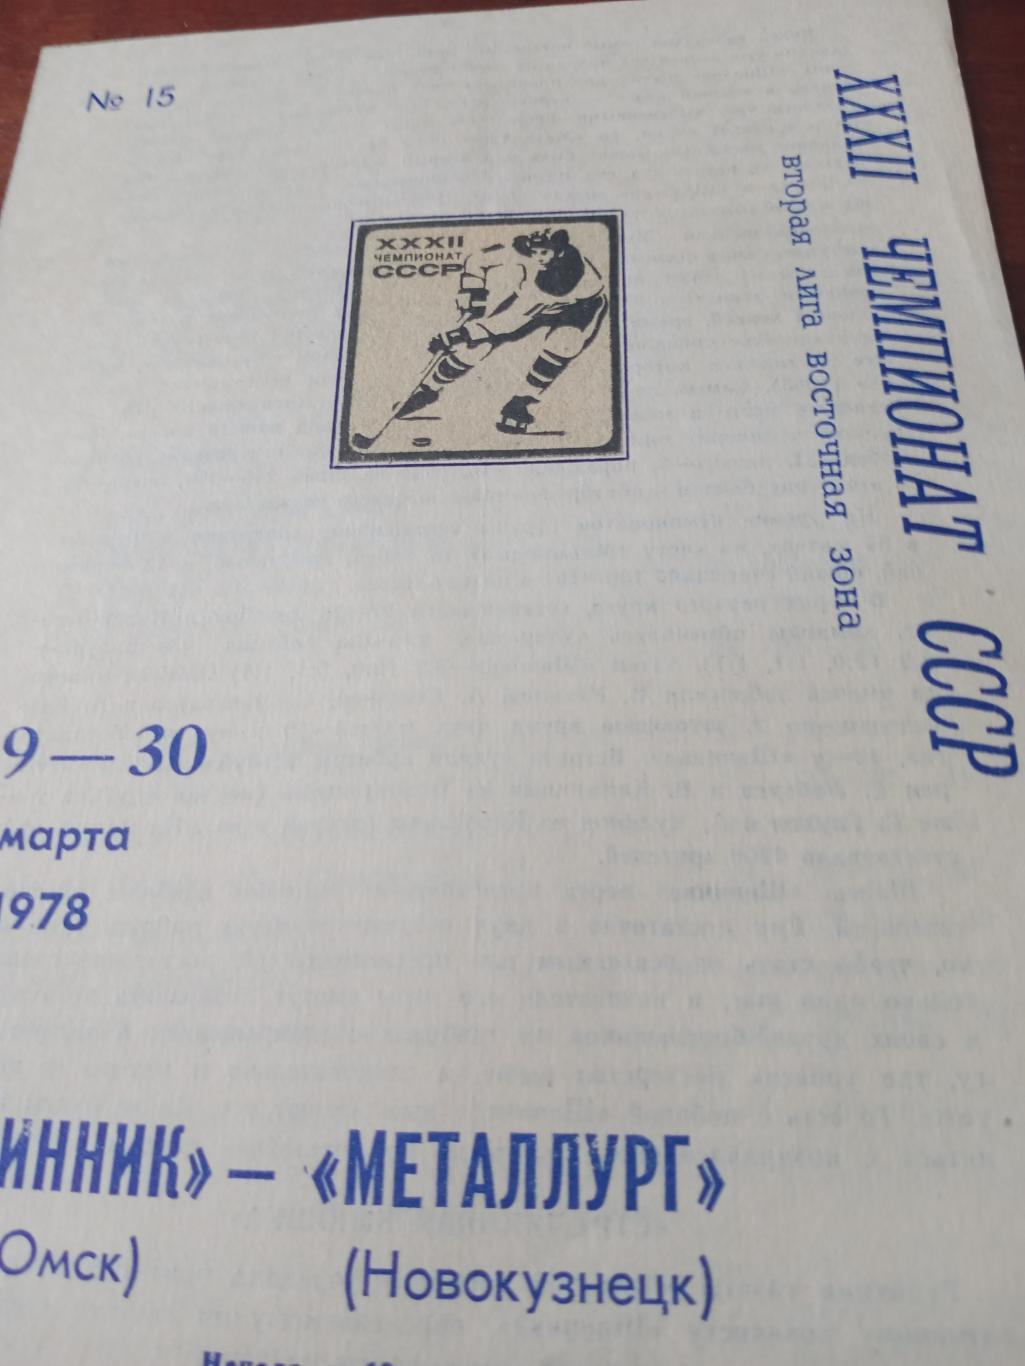 Шинник Омск - Металлург Новокузнецк. 29 и 30 марта 1978 год